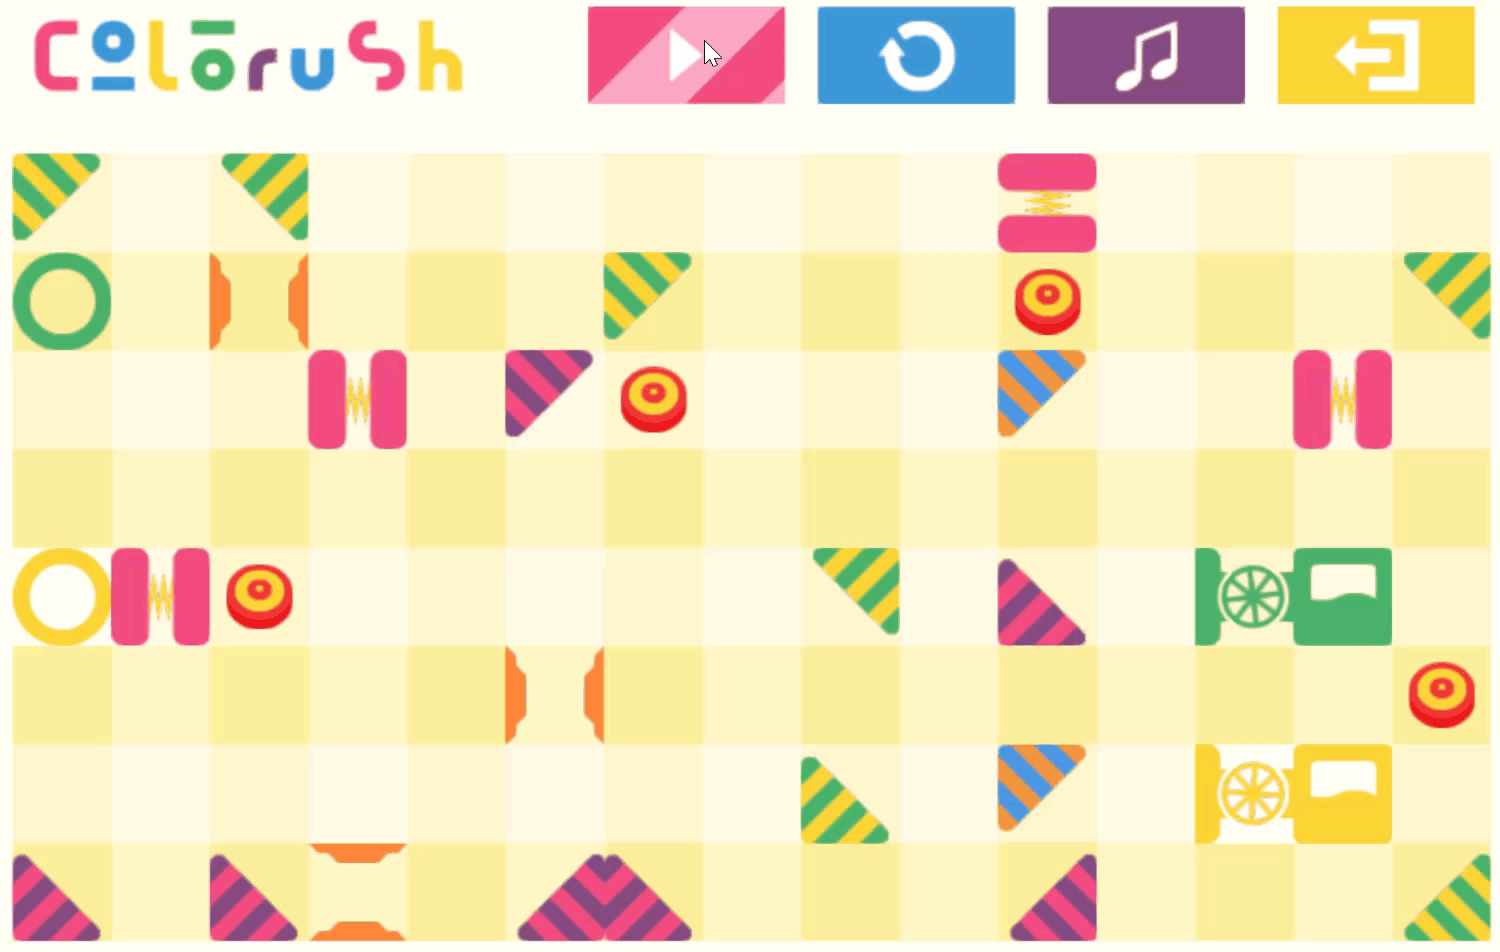 Colorush Game Level 26 Screenshot.